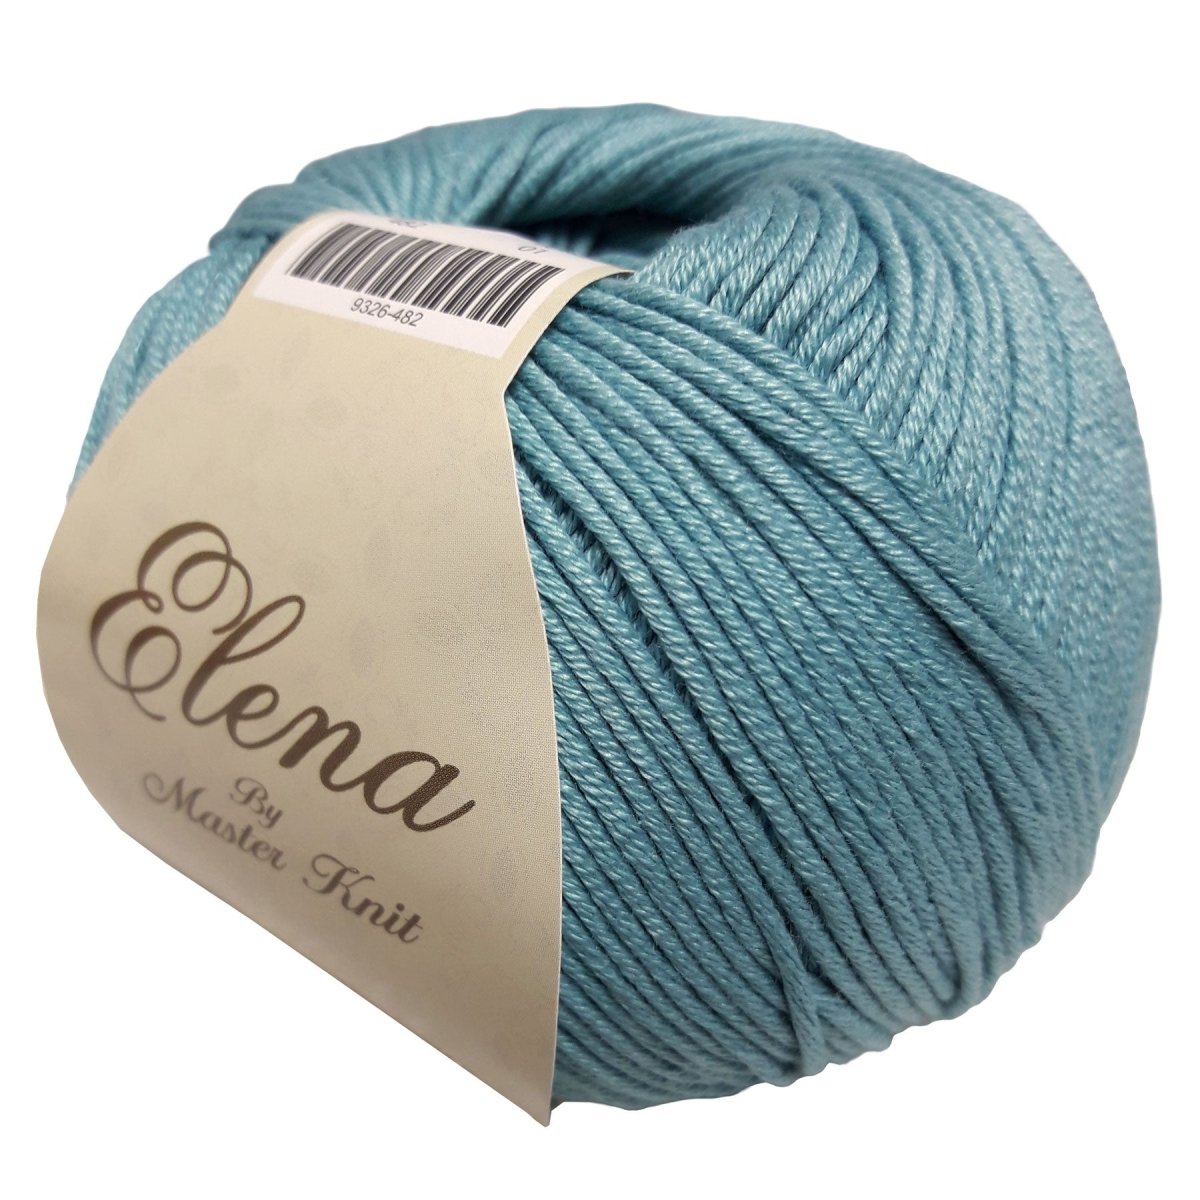 ELENA - Crochetstores9326-482745051438937